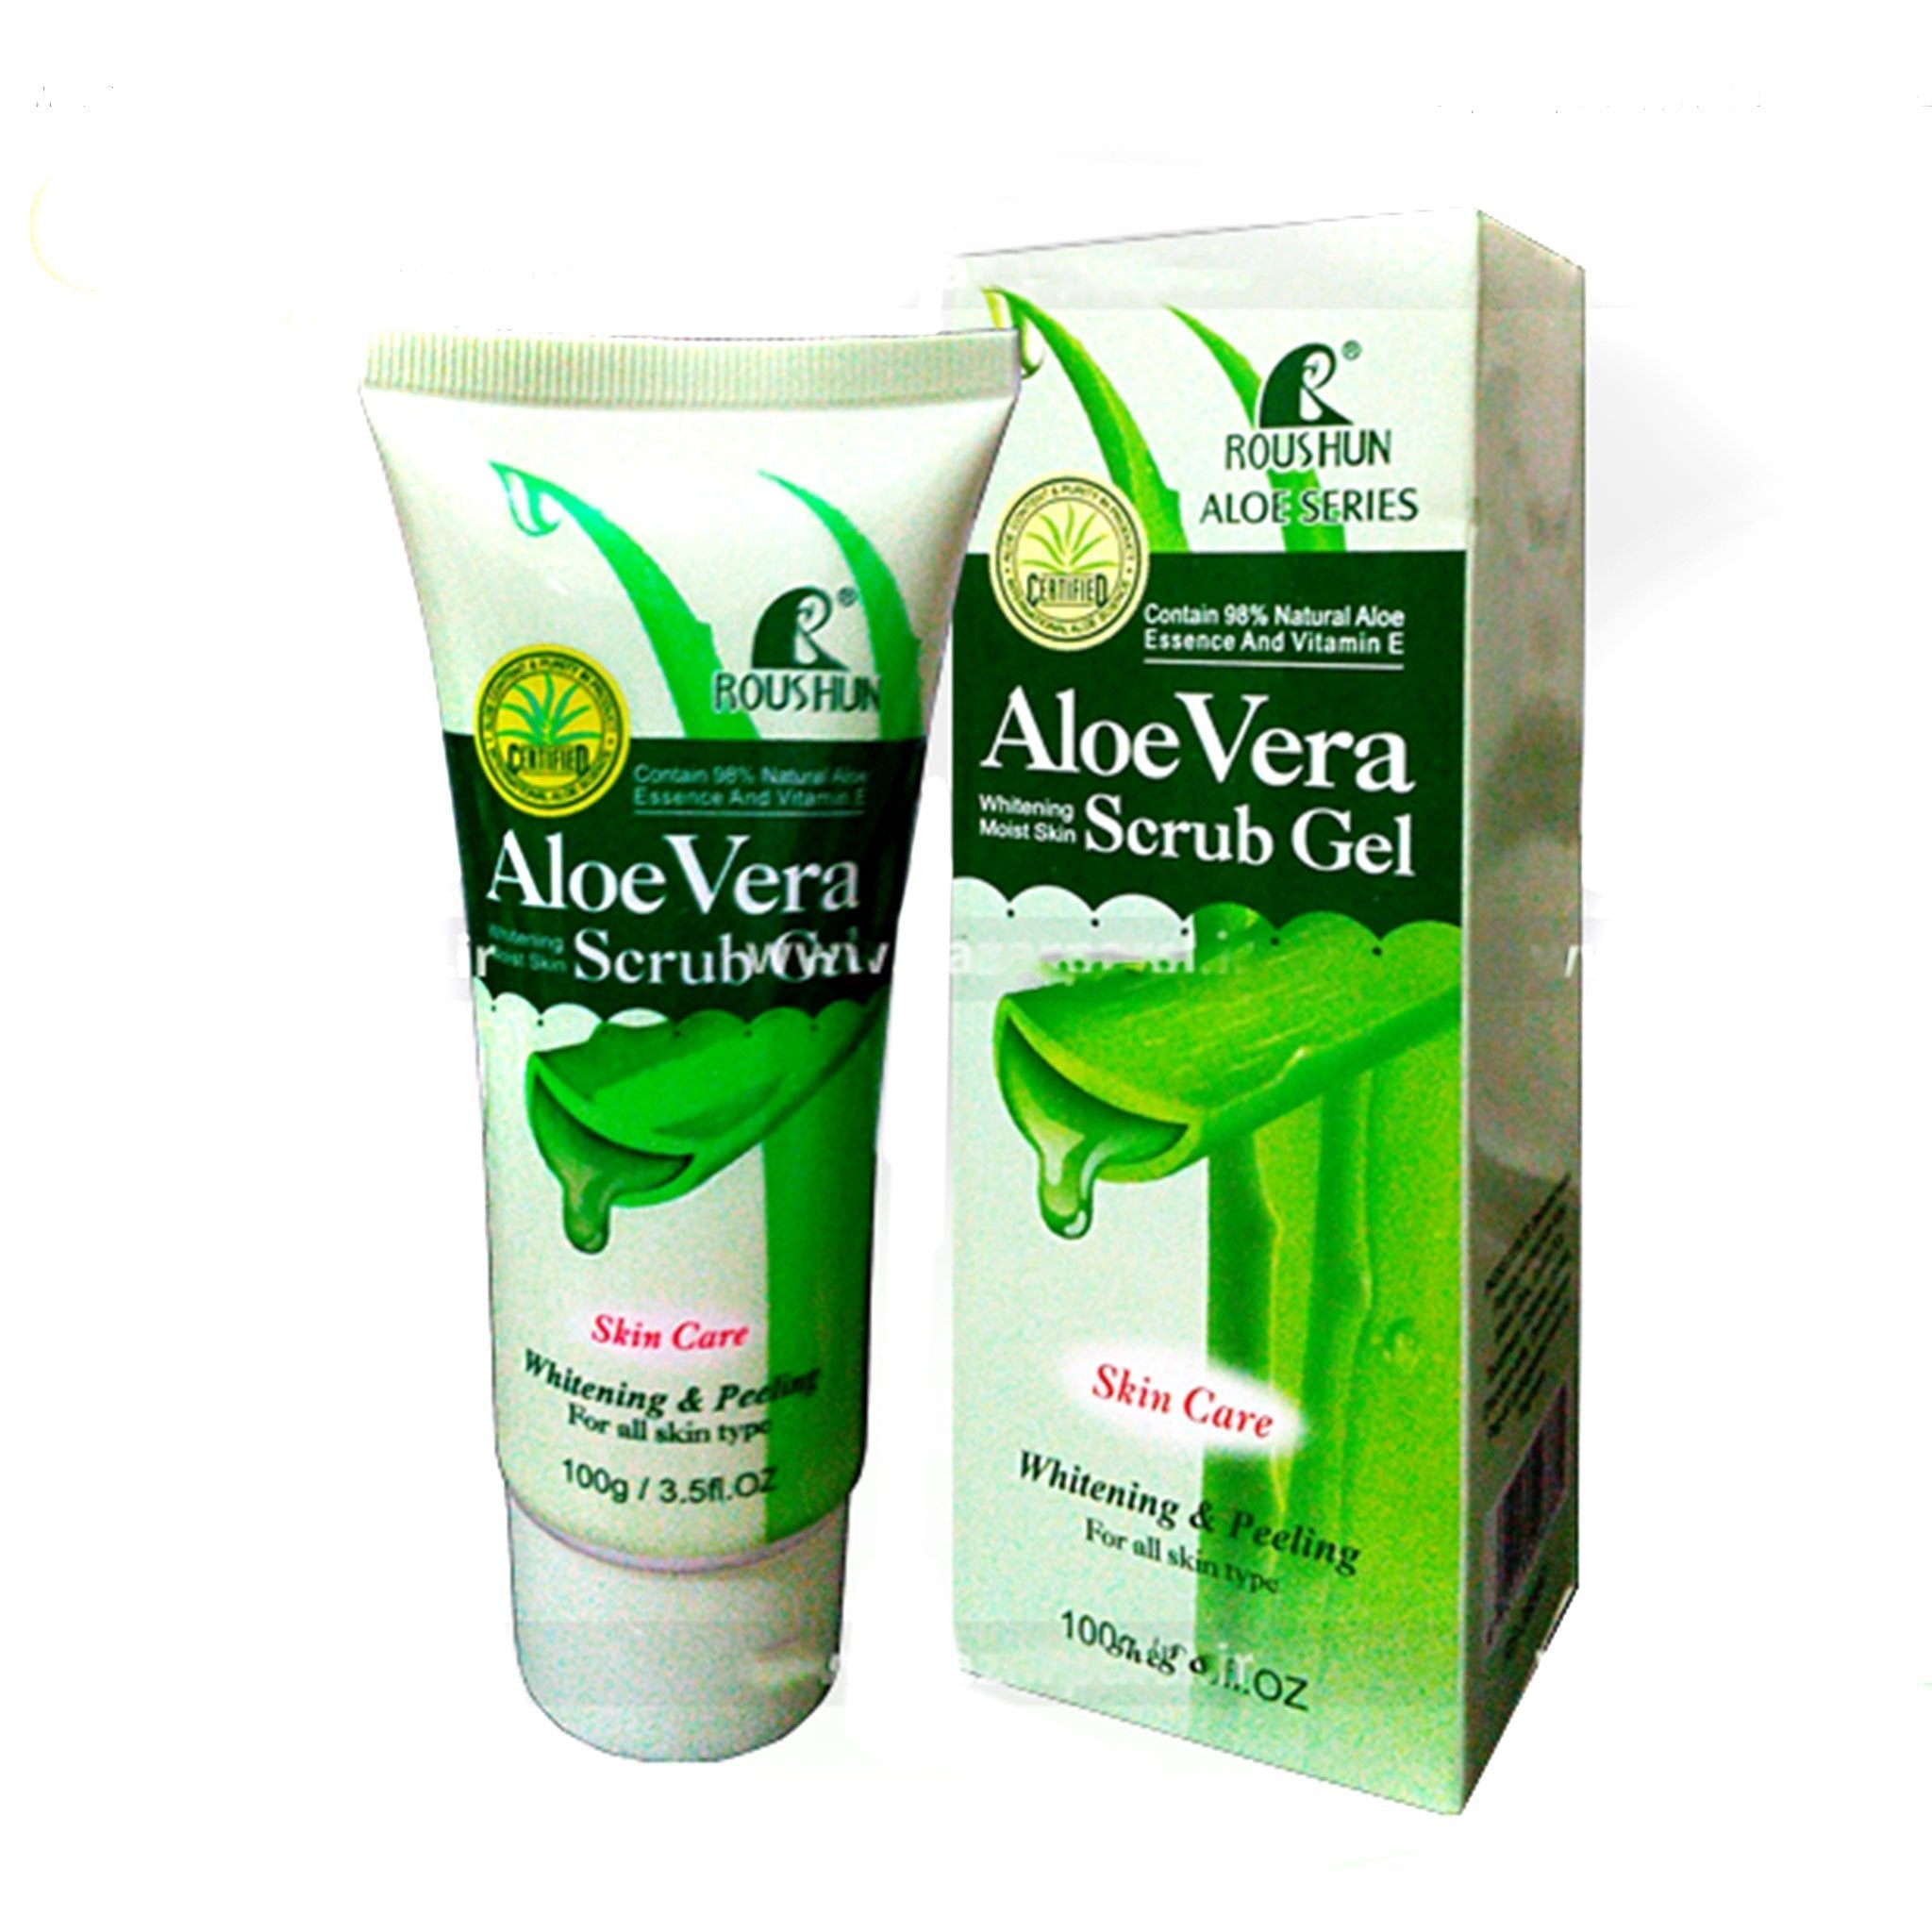 Roushun Aloe Vera Facial Scrub Gel 100g Value Pack of 3 